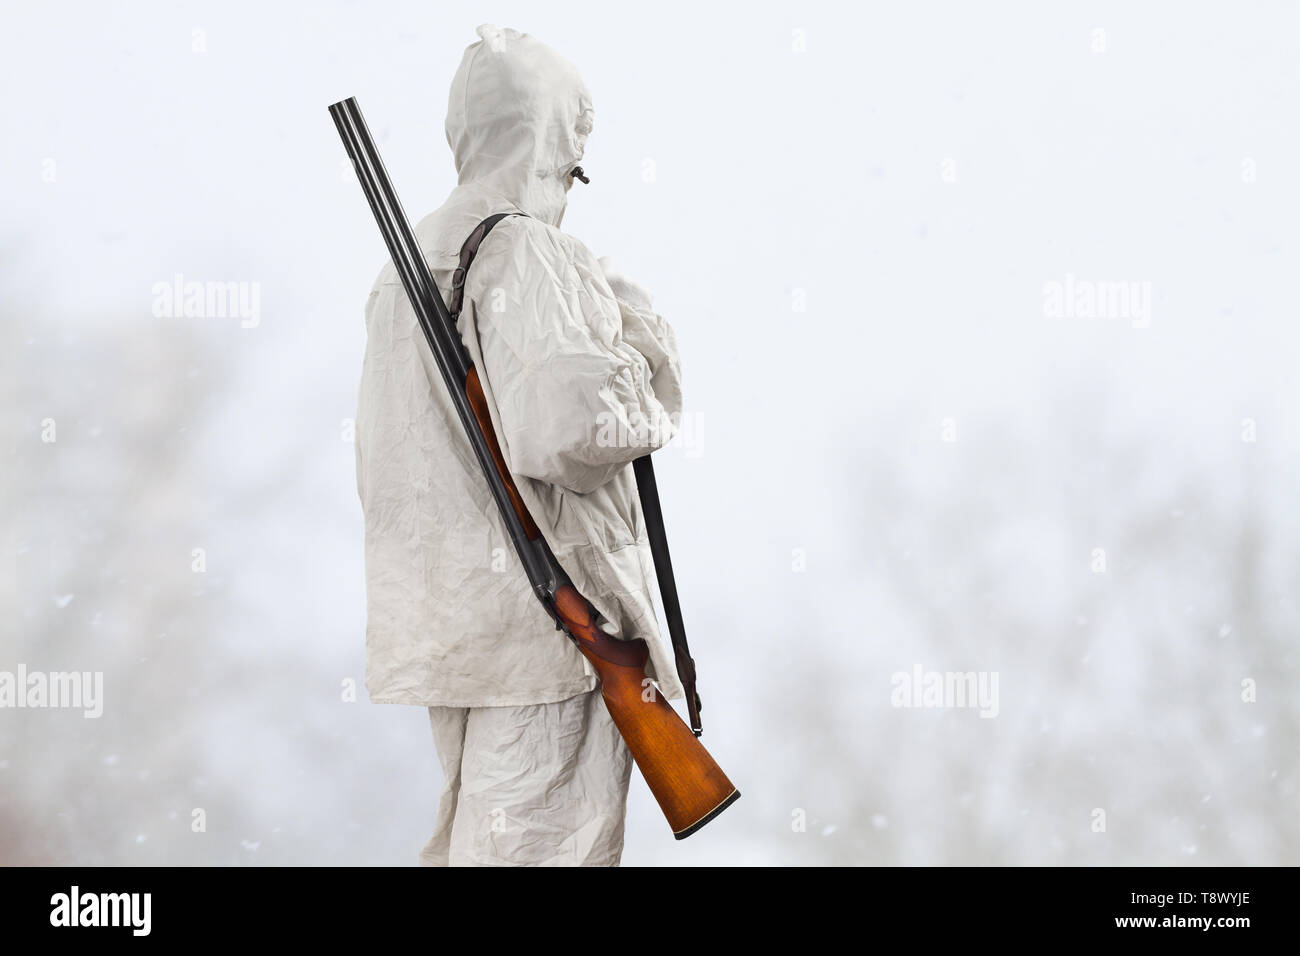 23,220 Snow Gun Images, Stock Photos, 3D objects, & Vectors